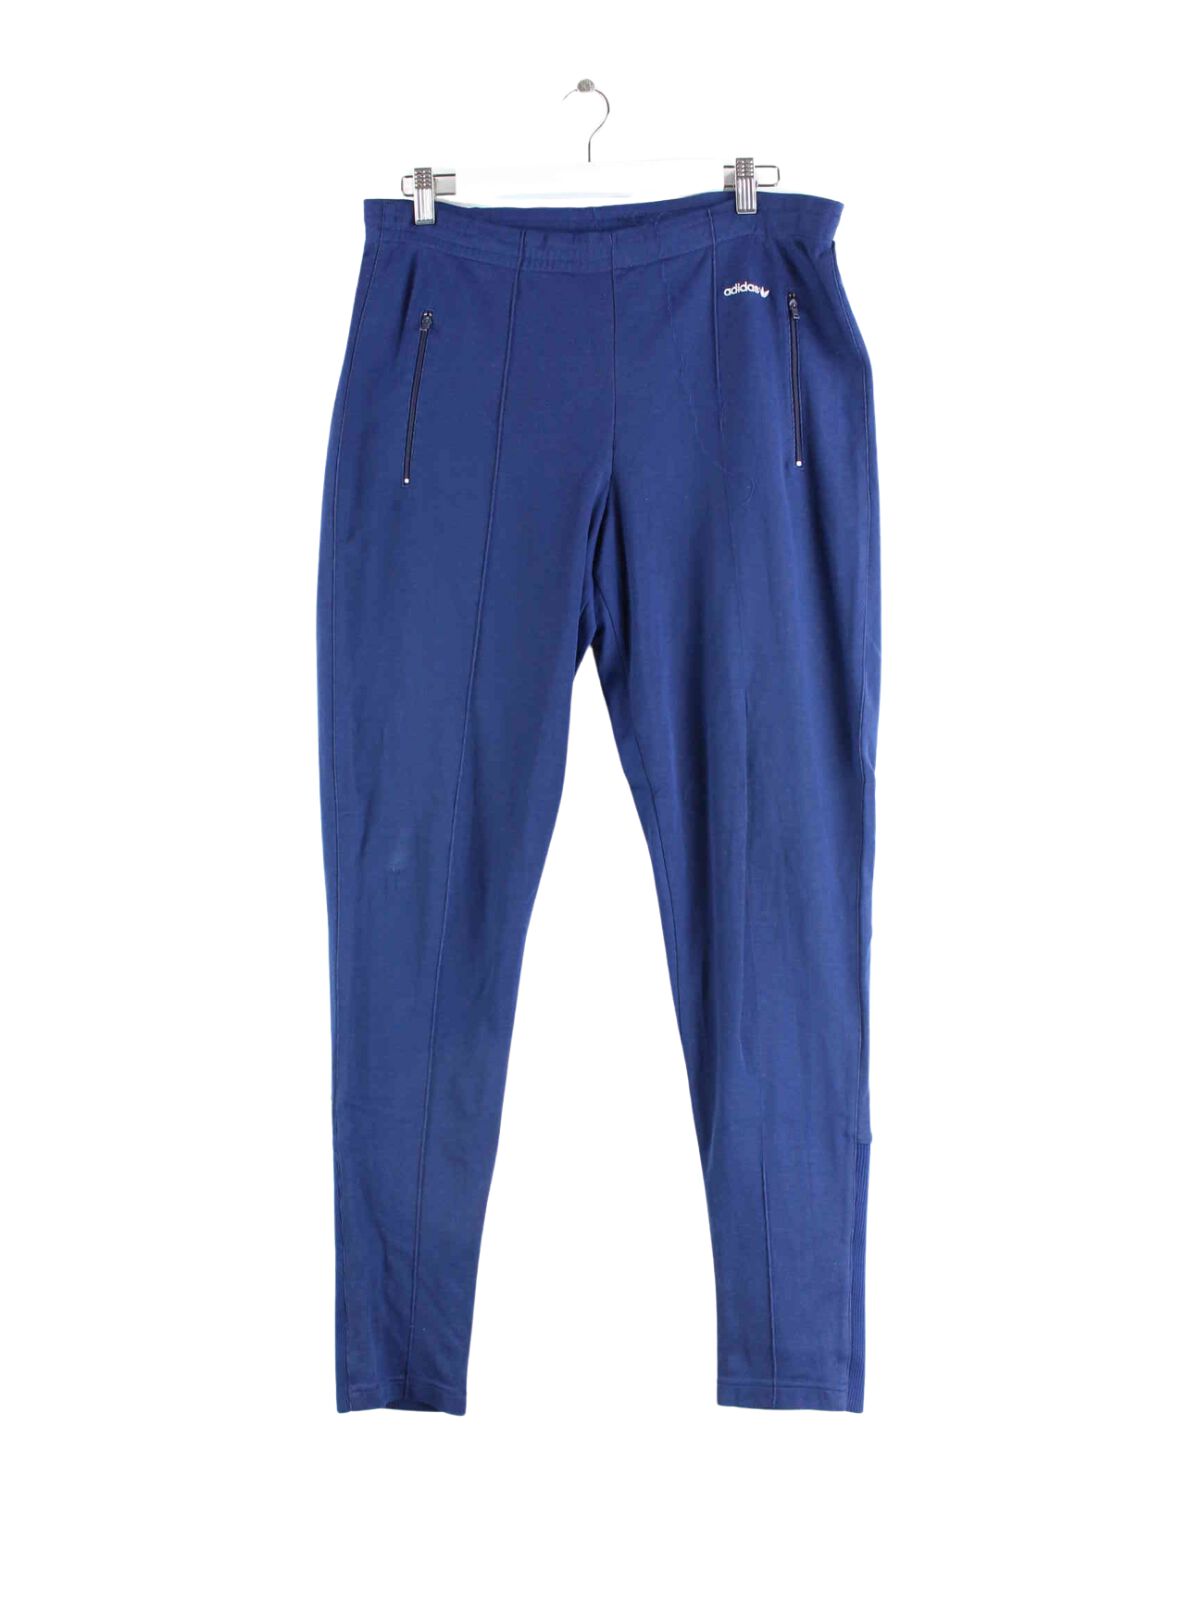 Adidas 80s Vintage Trefoil Track Pants Blau S (front image)